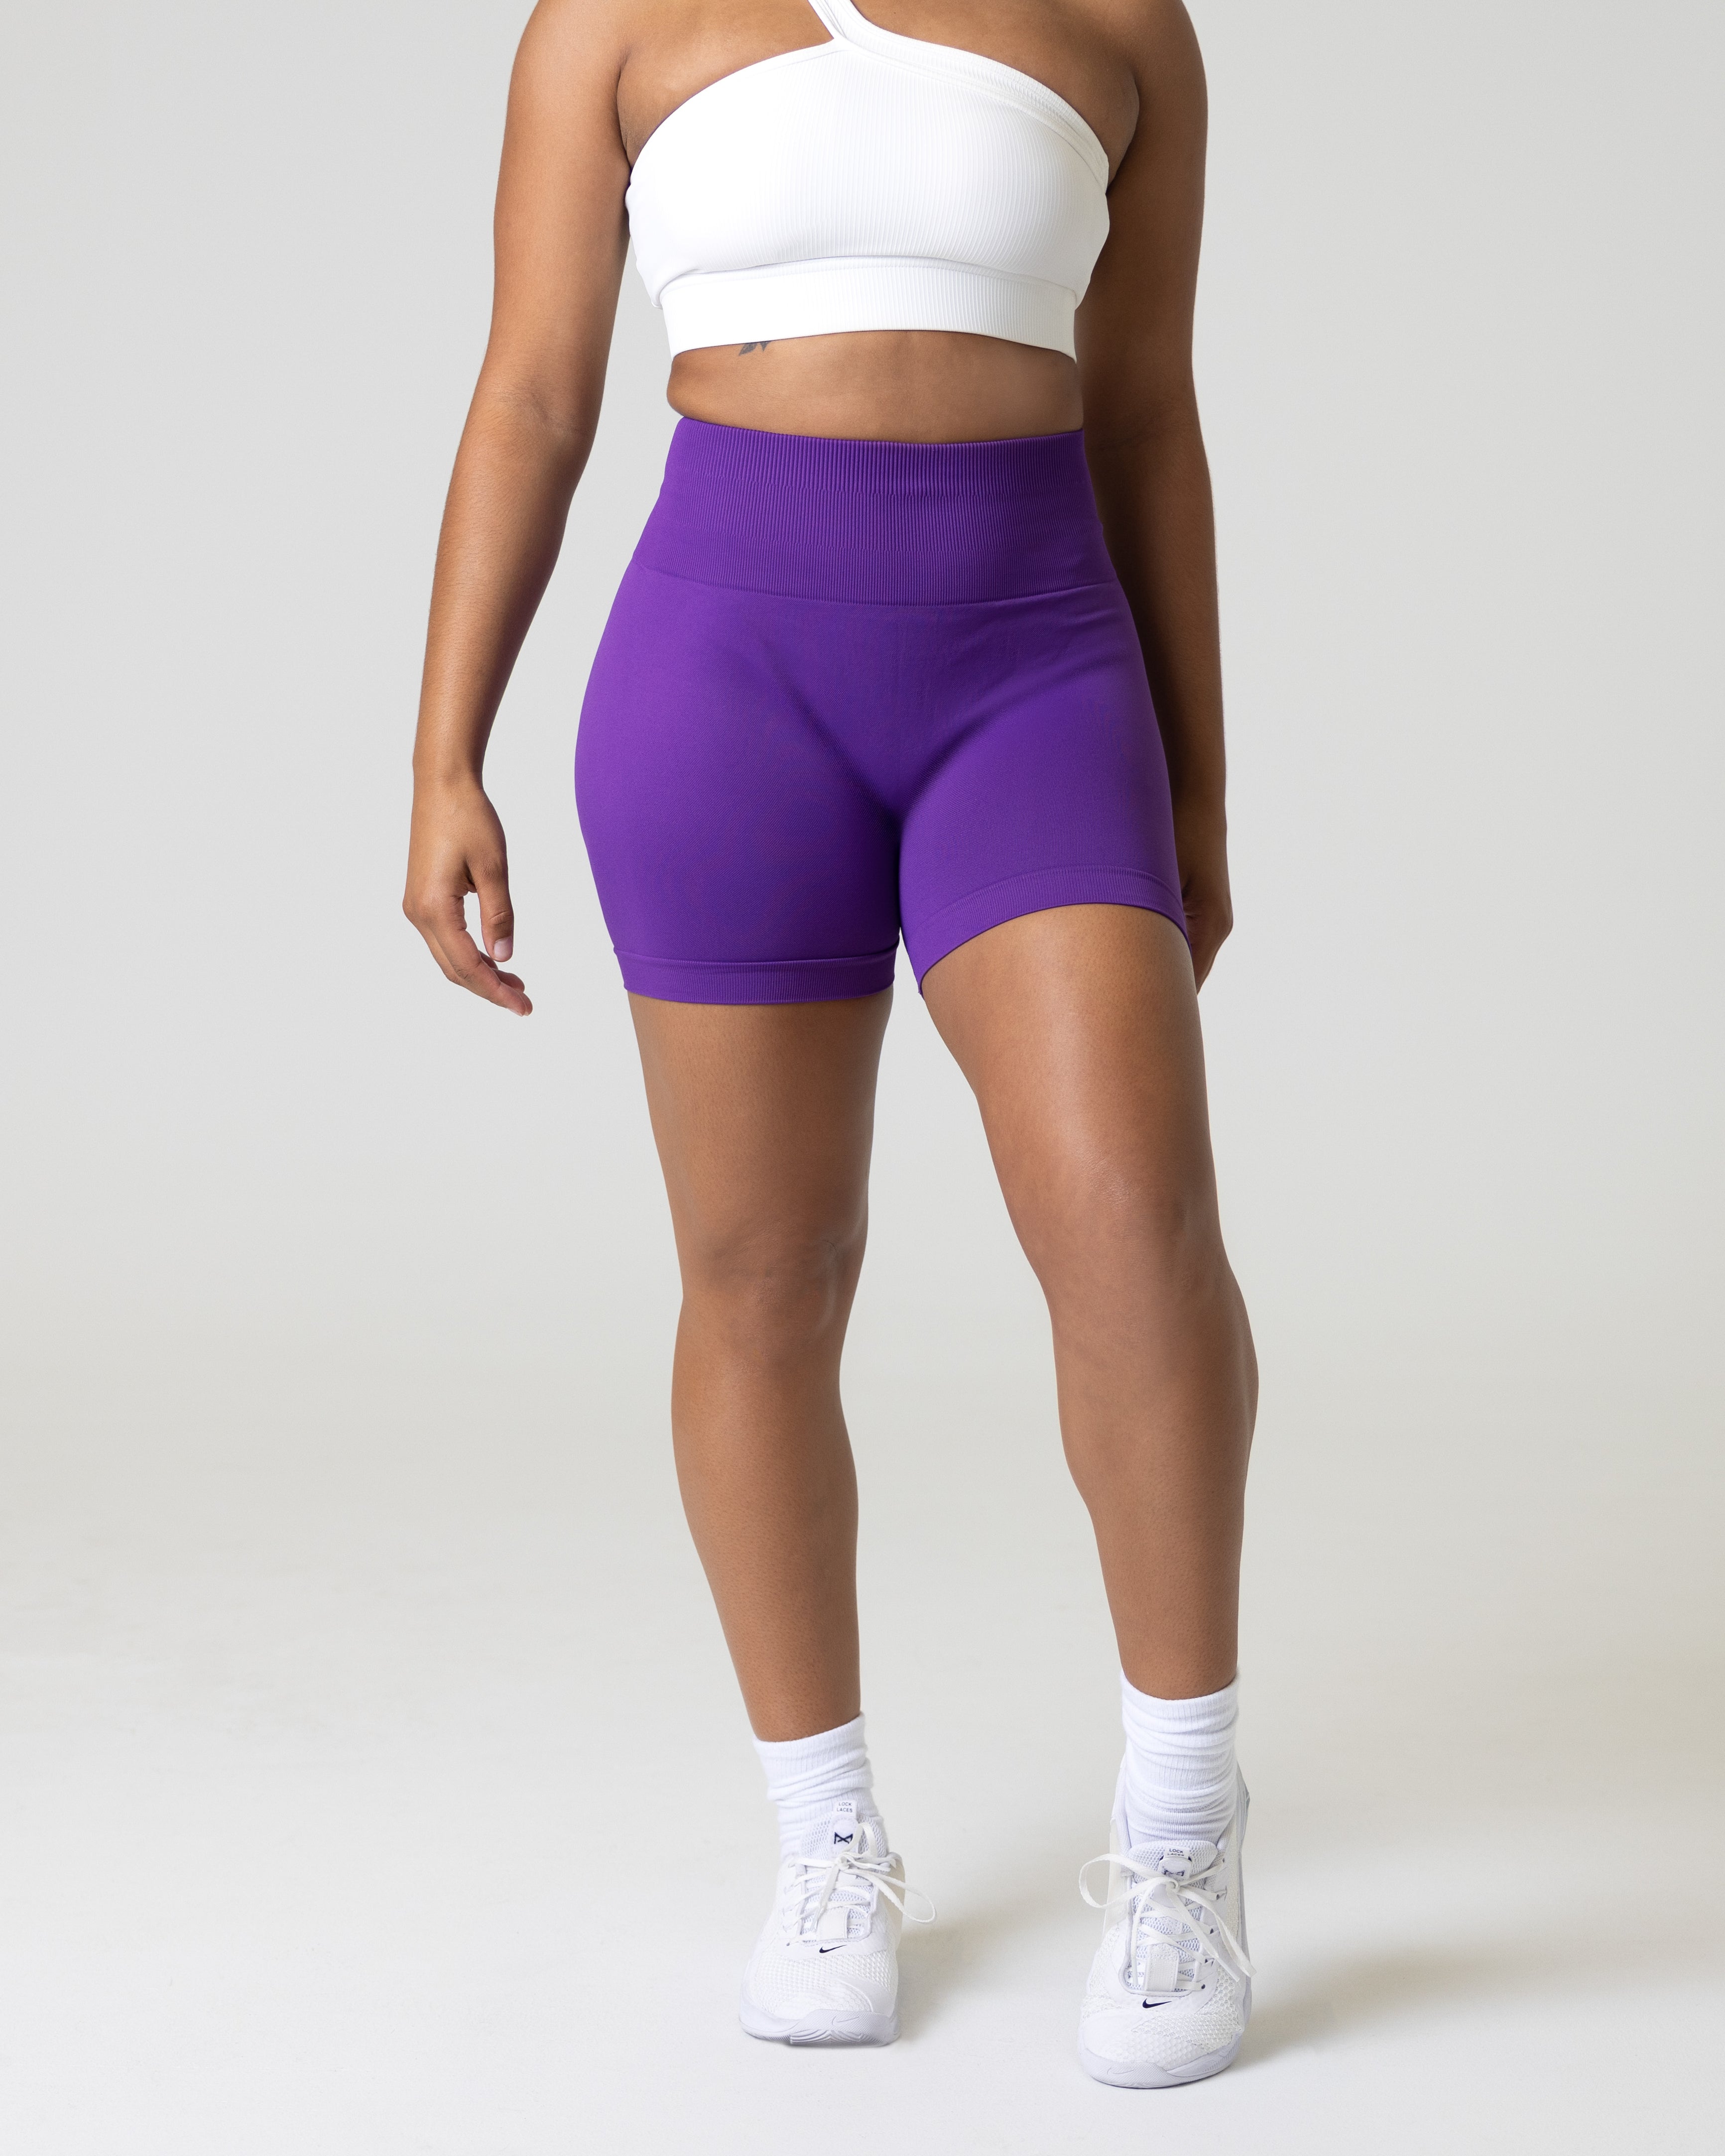 A woman wearing purple gym shorts for women scrunch beam